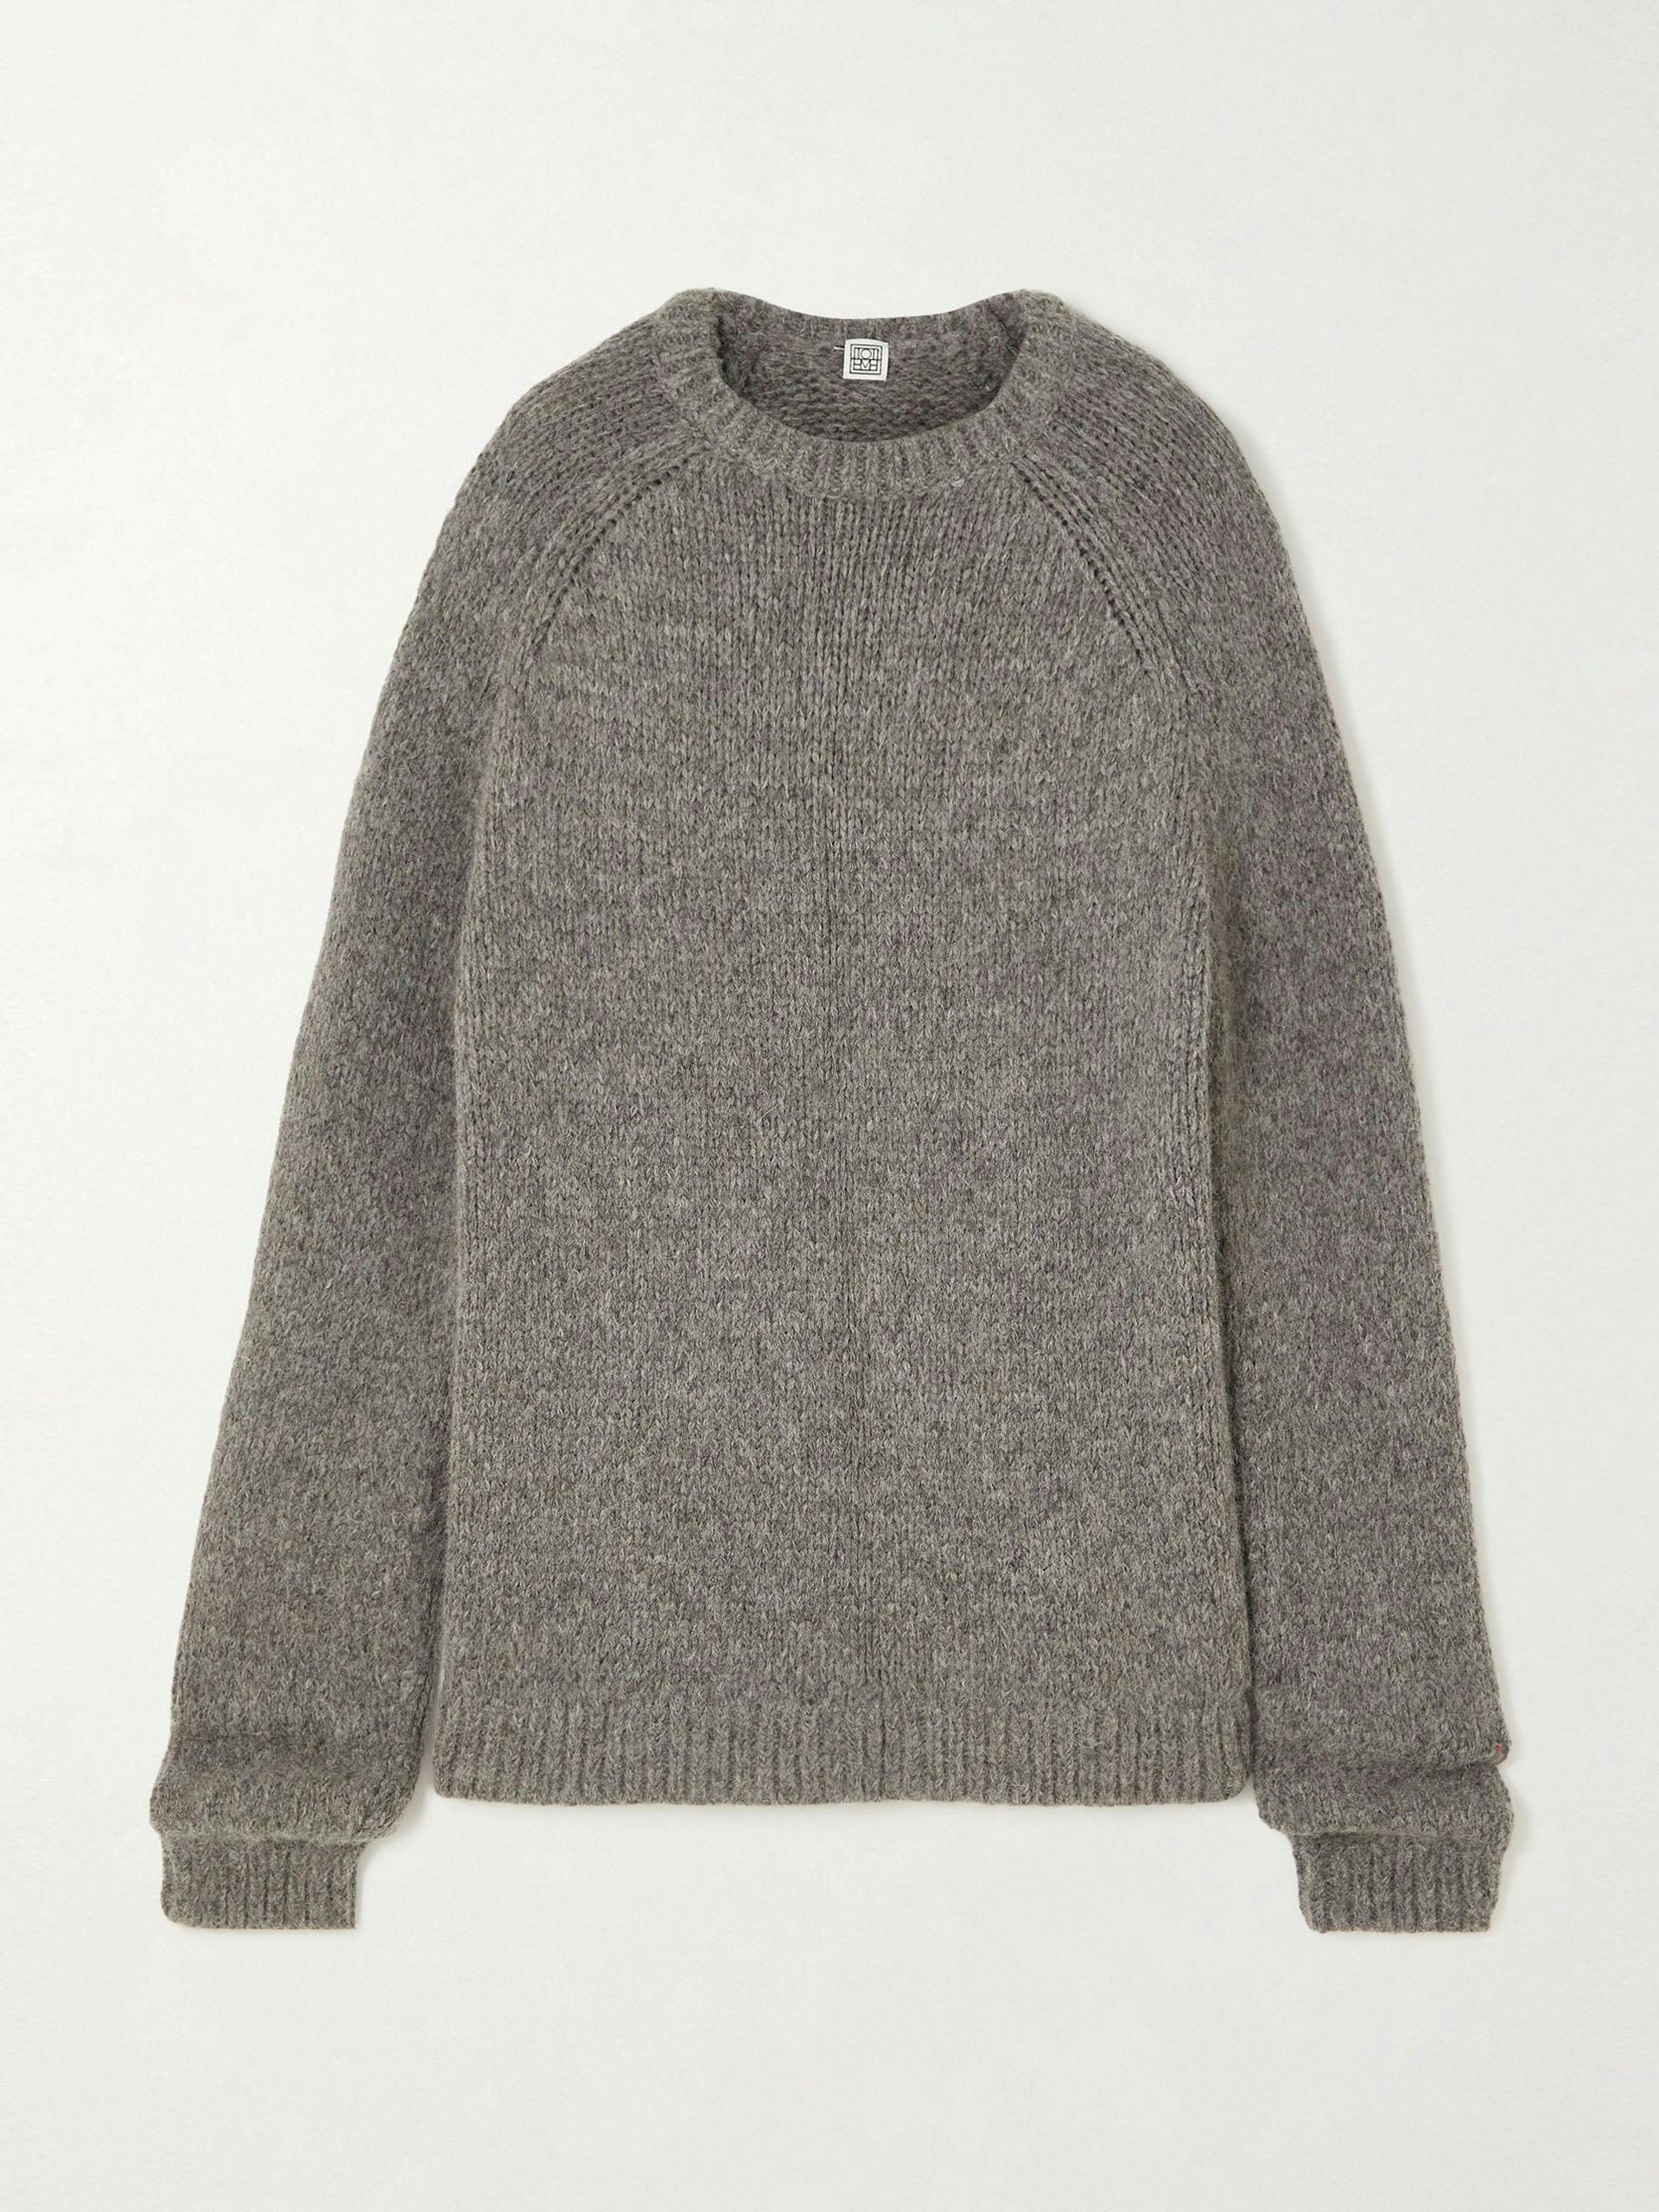 Llama-blend sweater